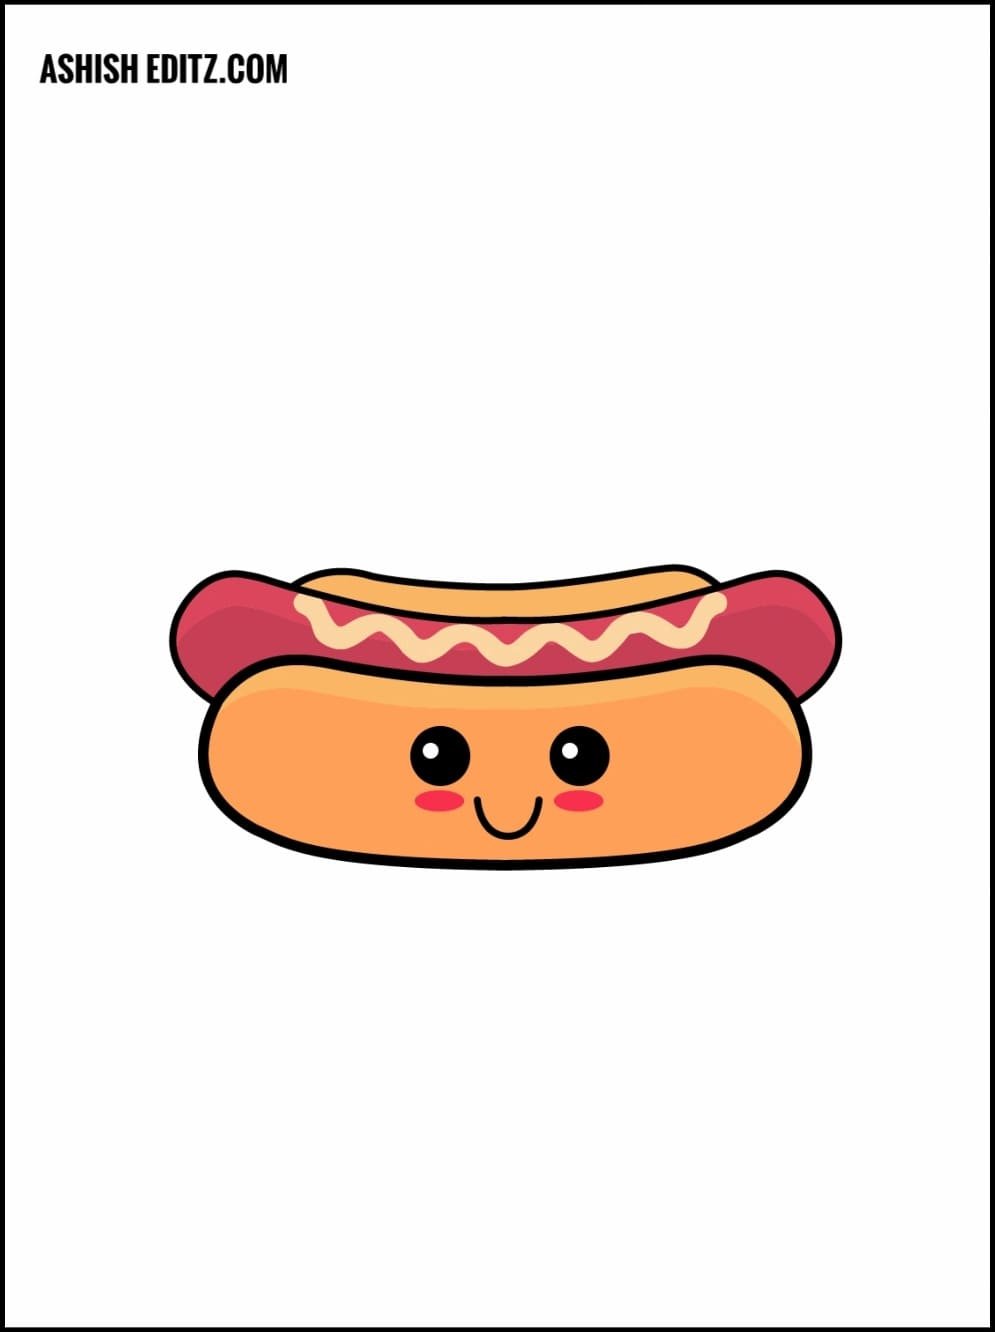 Hot dog with mustard hand drawing Royalty Free Vector Image